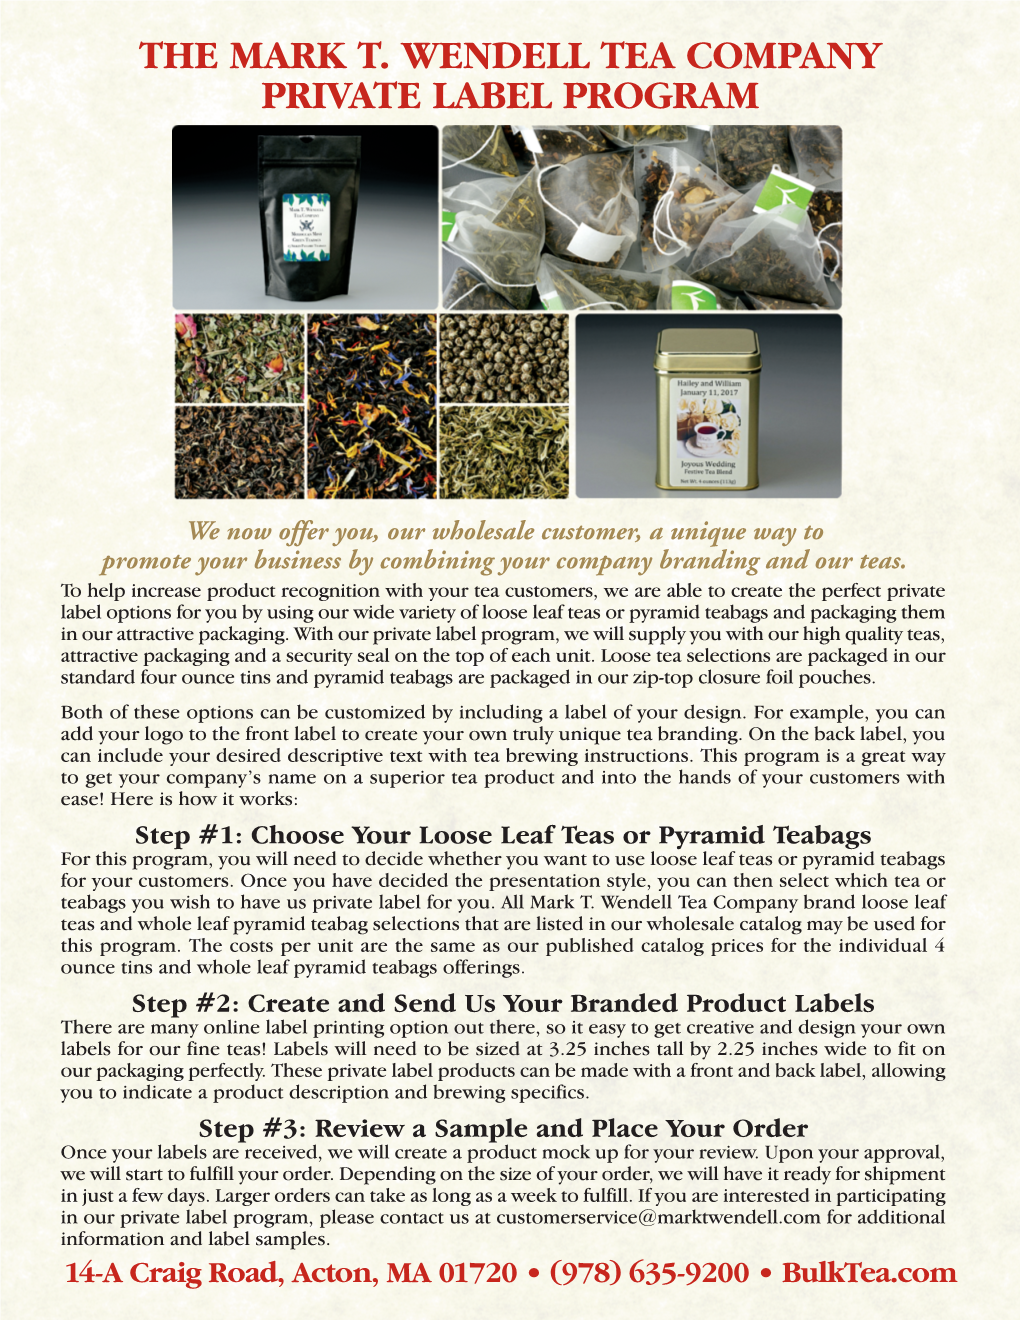 The Mark T. Wendell Tea Company Private Label Program